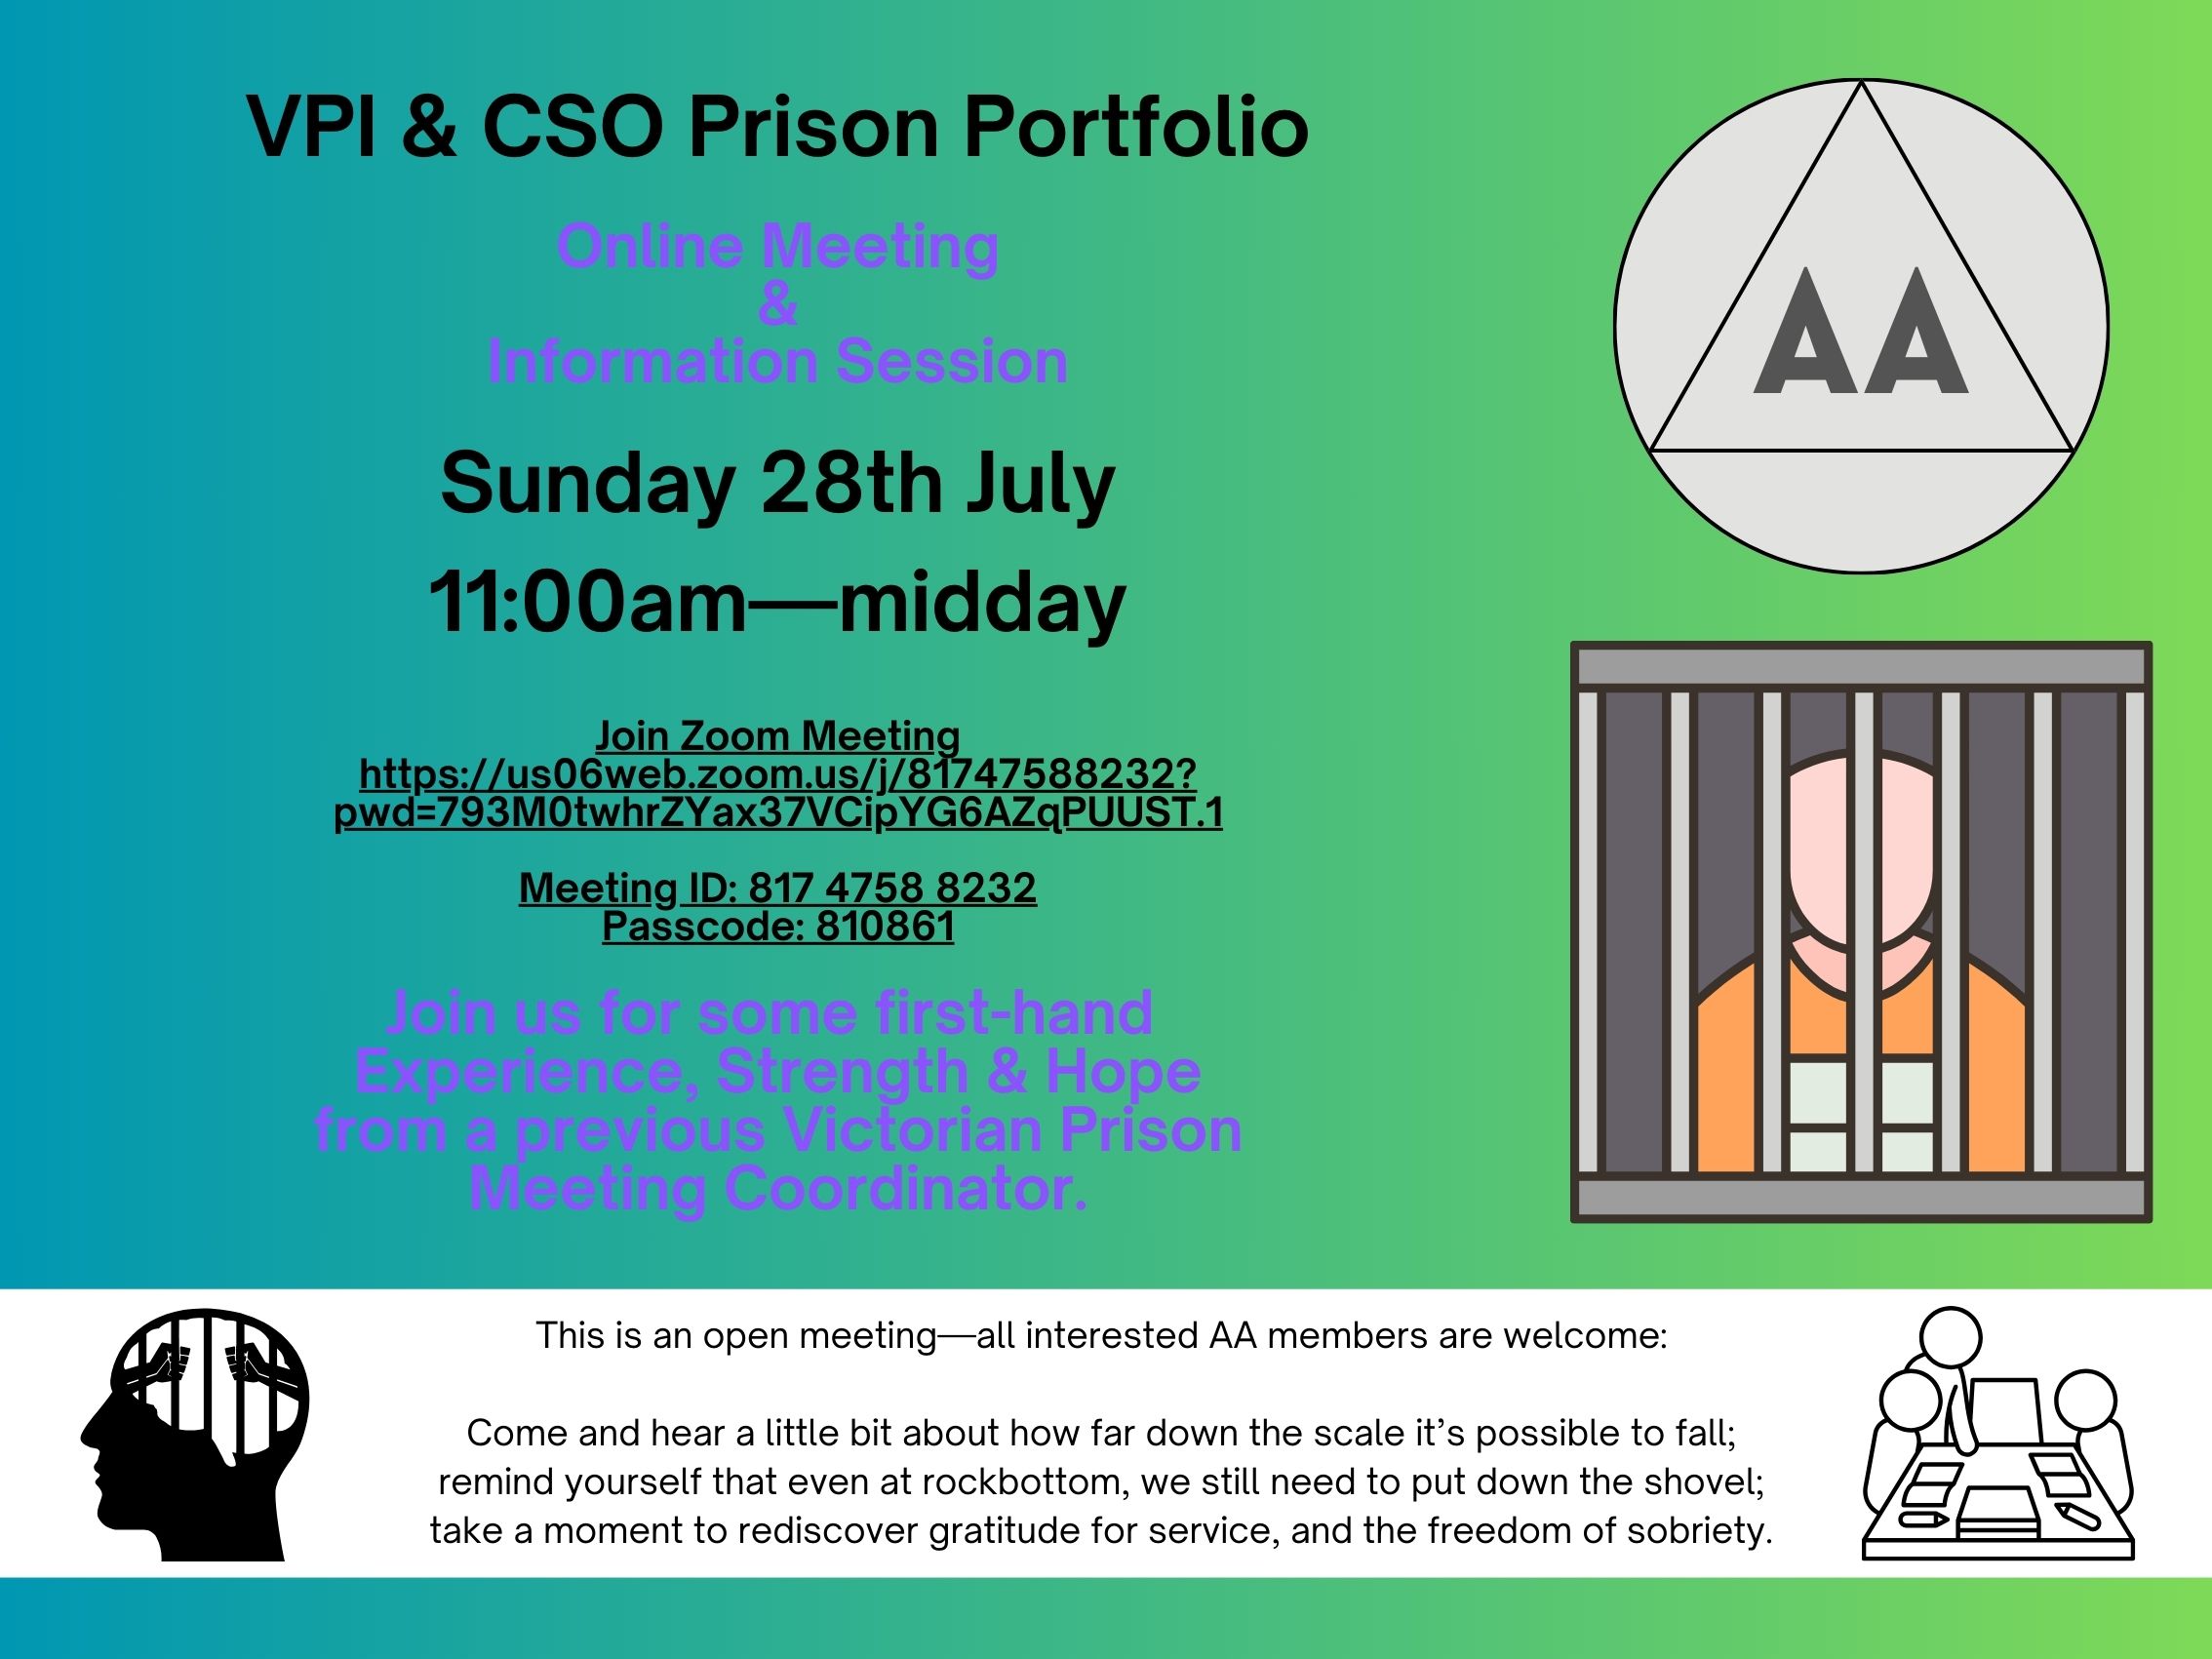 VPI and CSO Prison Portfolio @ Zoom Meeting (See Flyer)